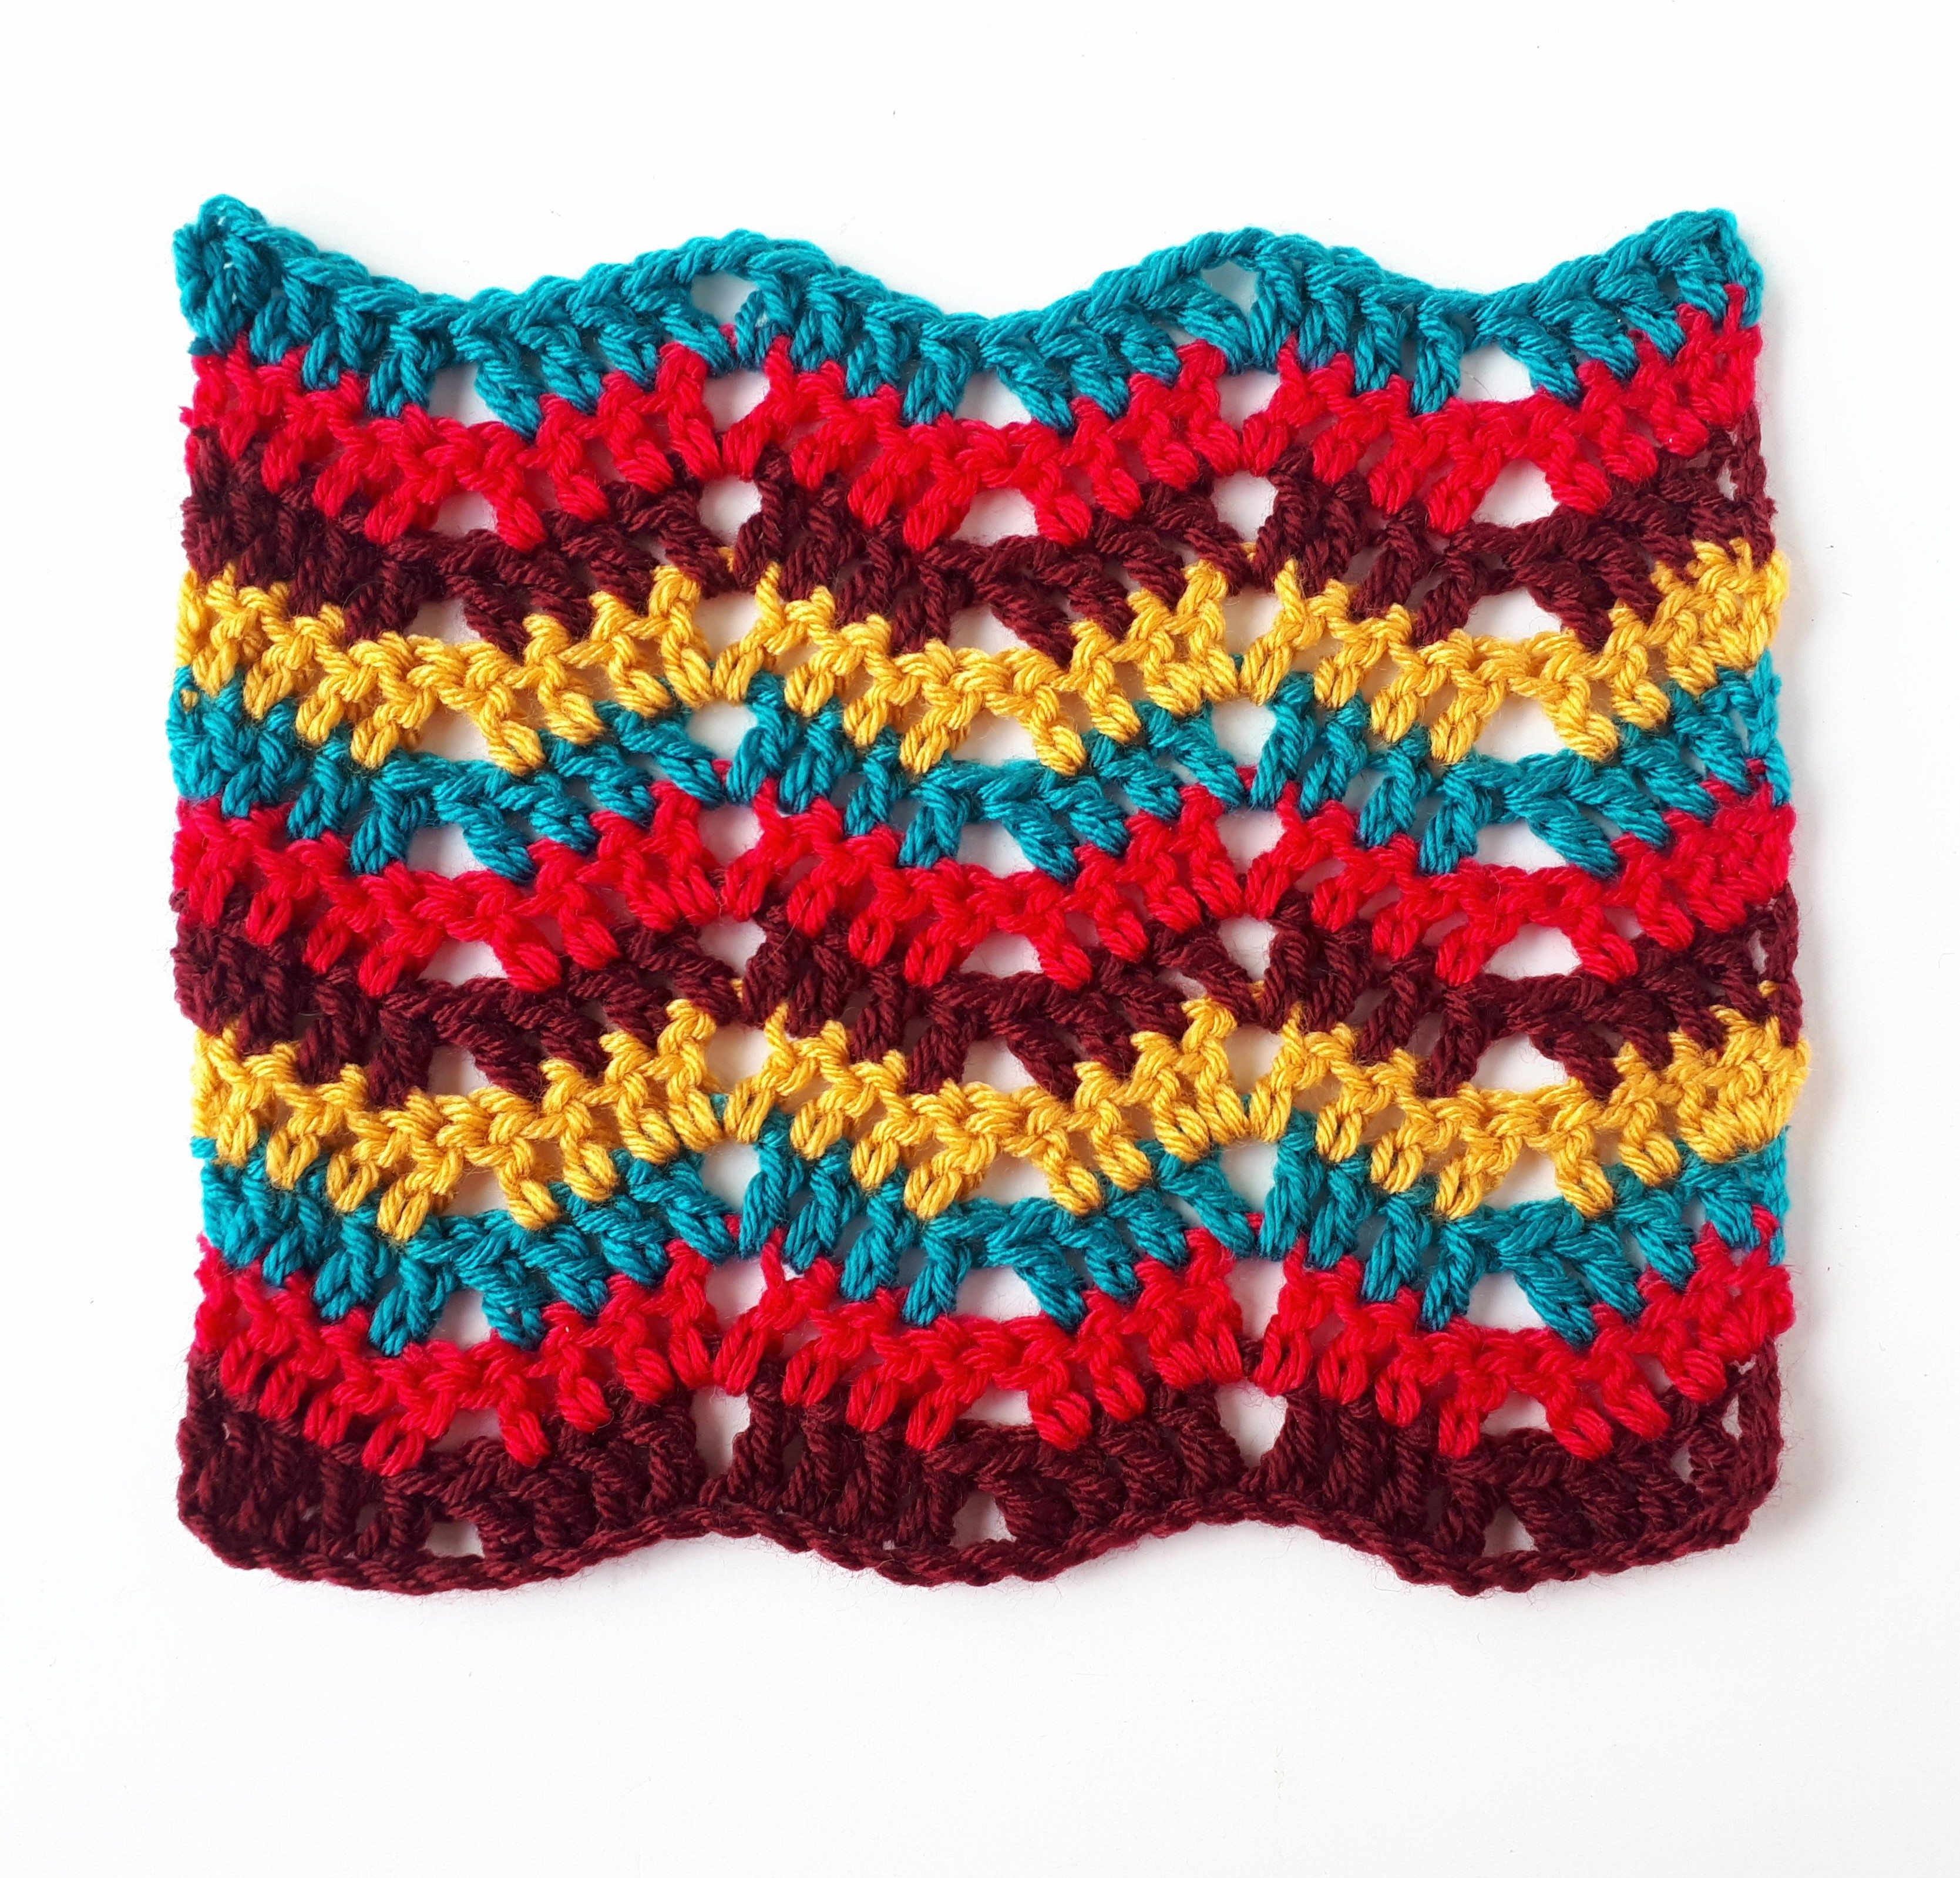 Ripple Pattern Crochet Easy Crochet Ripple Stitch Tutorial